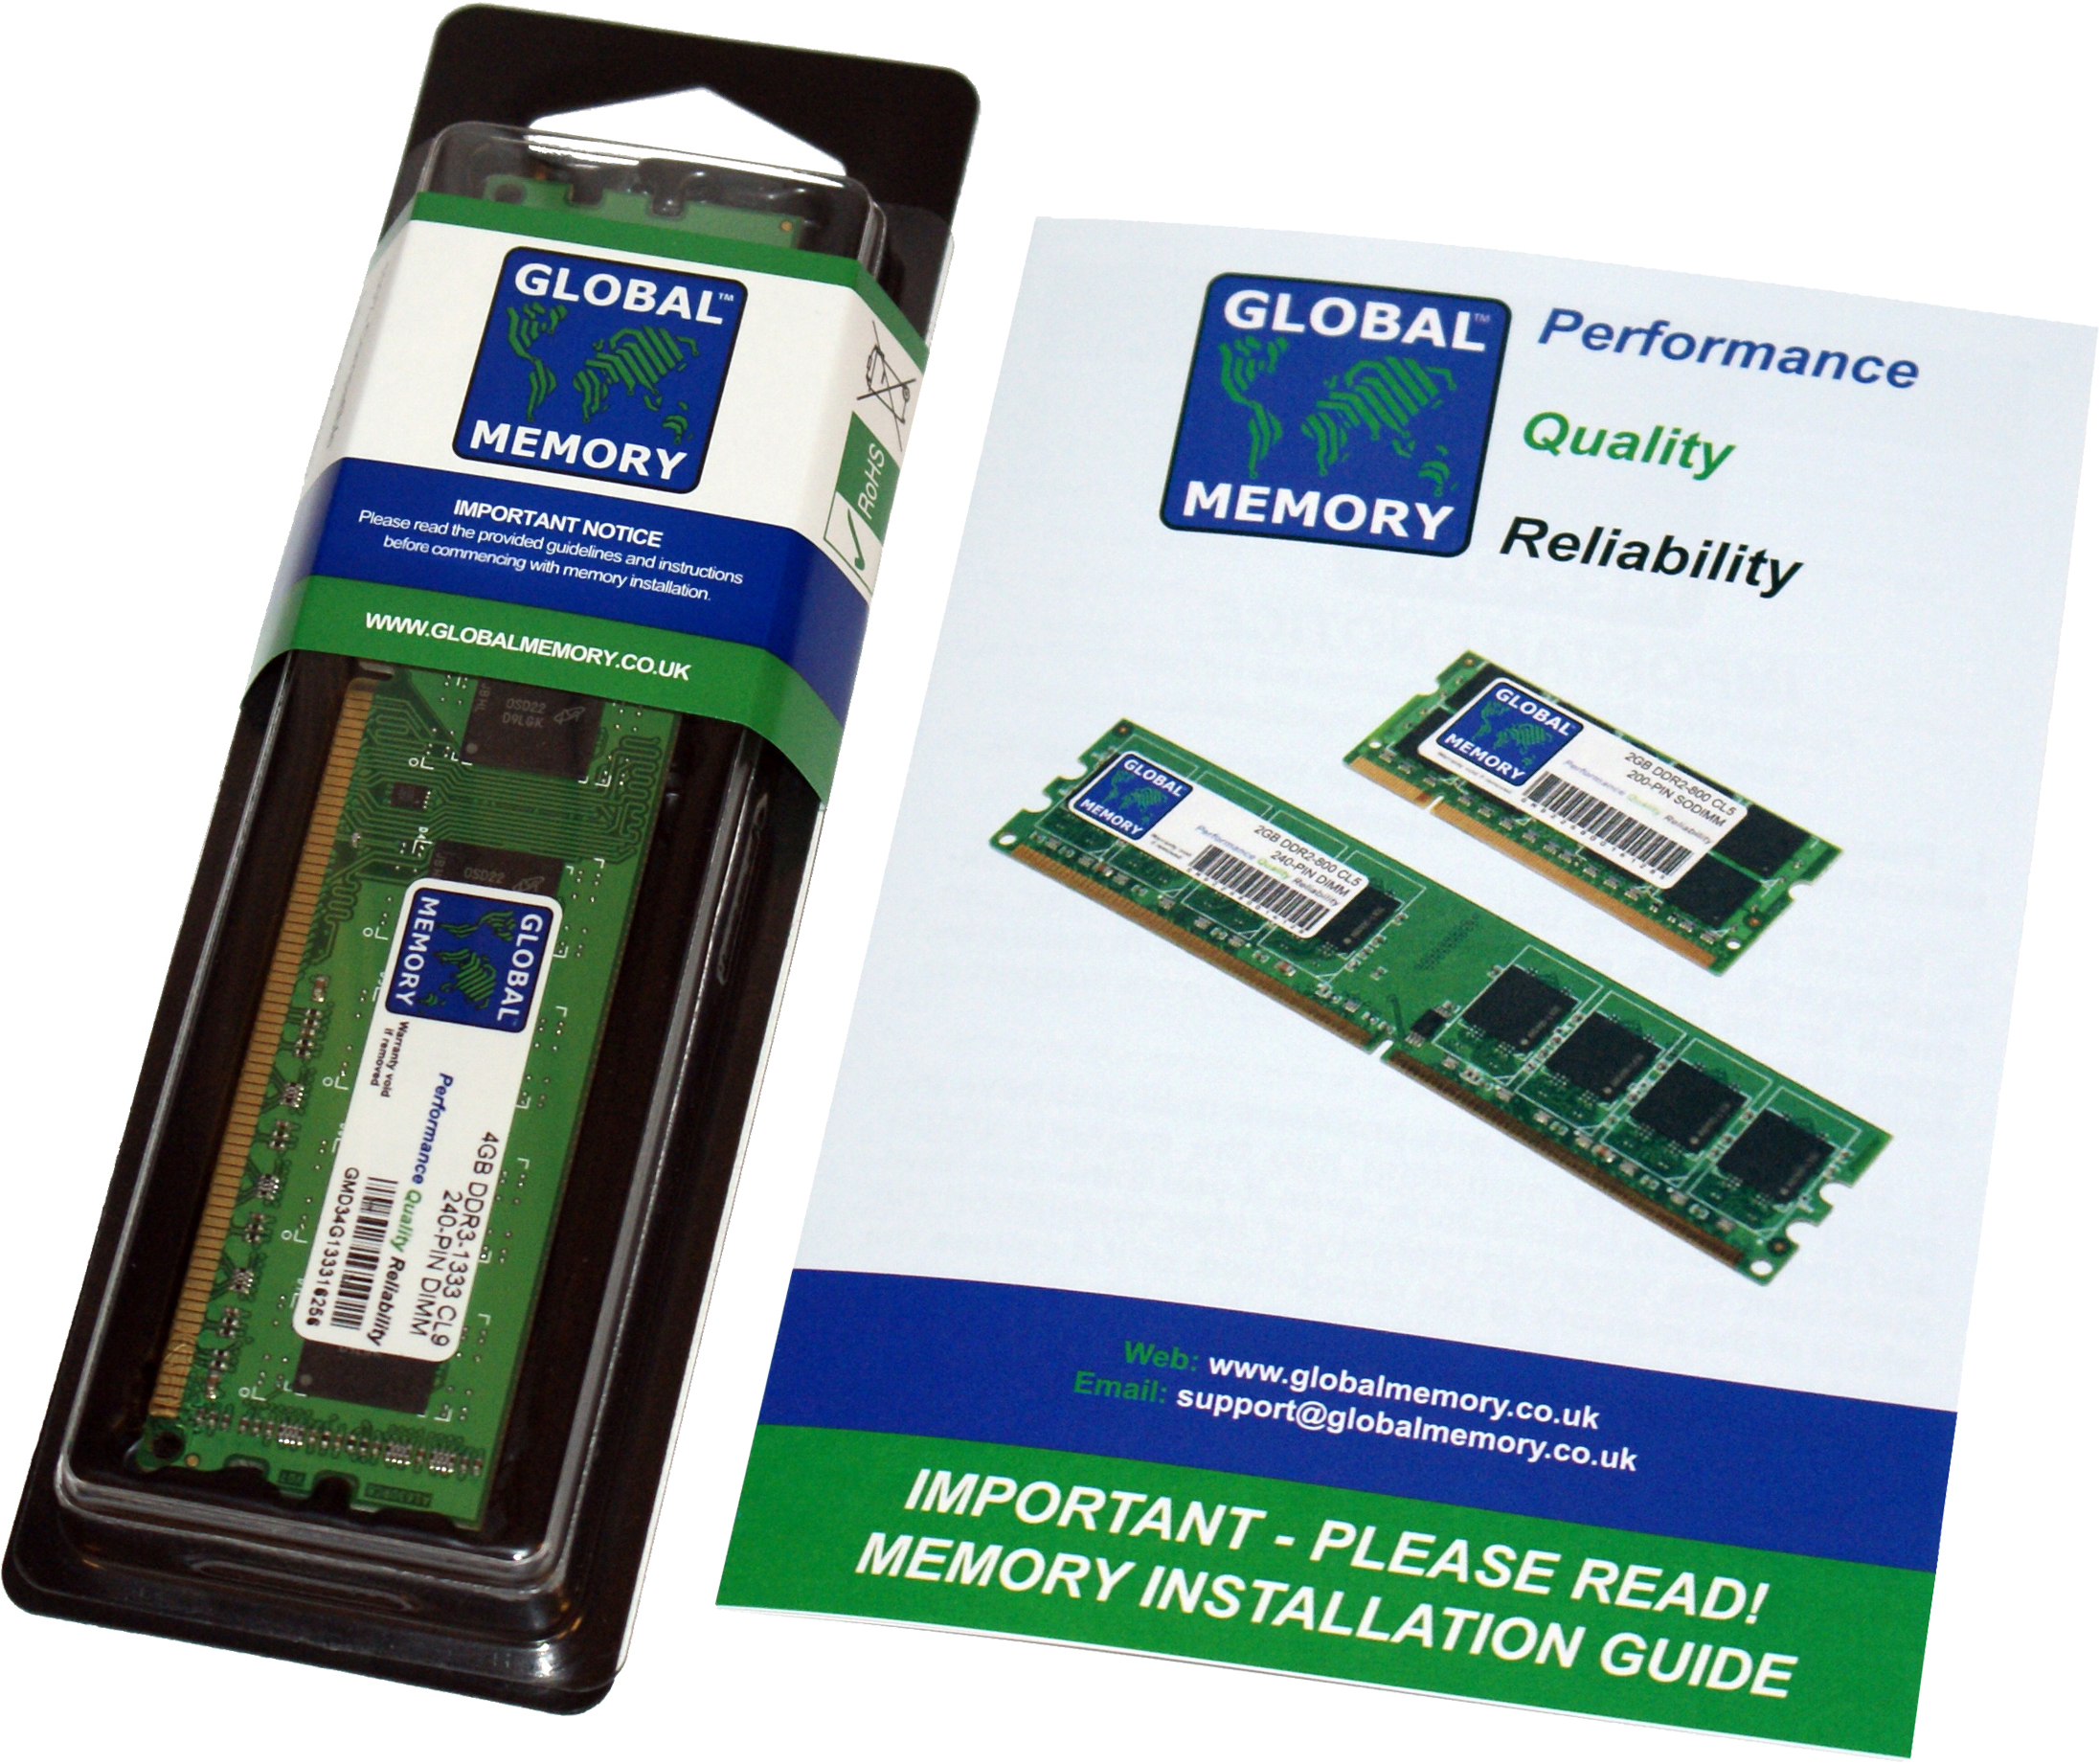 8GB DDR3 1866MHz PC3-14900 240-PIN DIMM MEMORY RAM FOR COMPAQ DESKTOPS